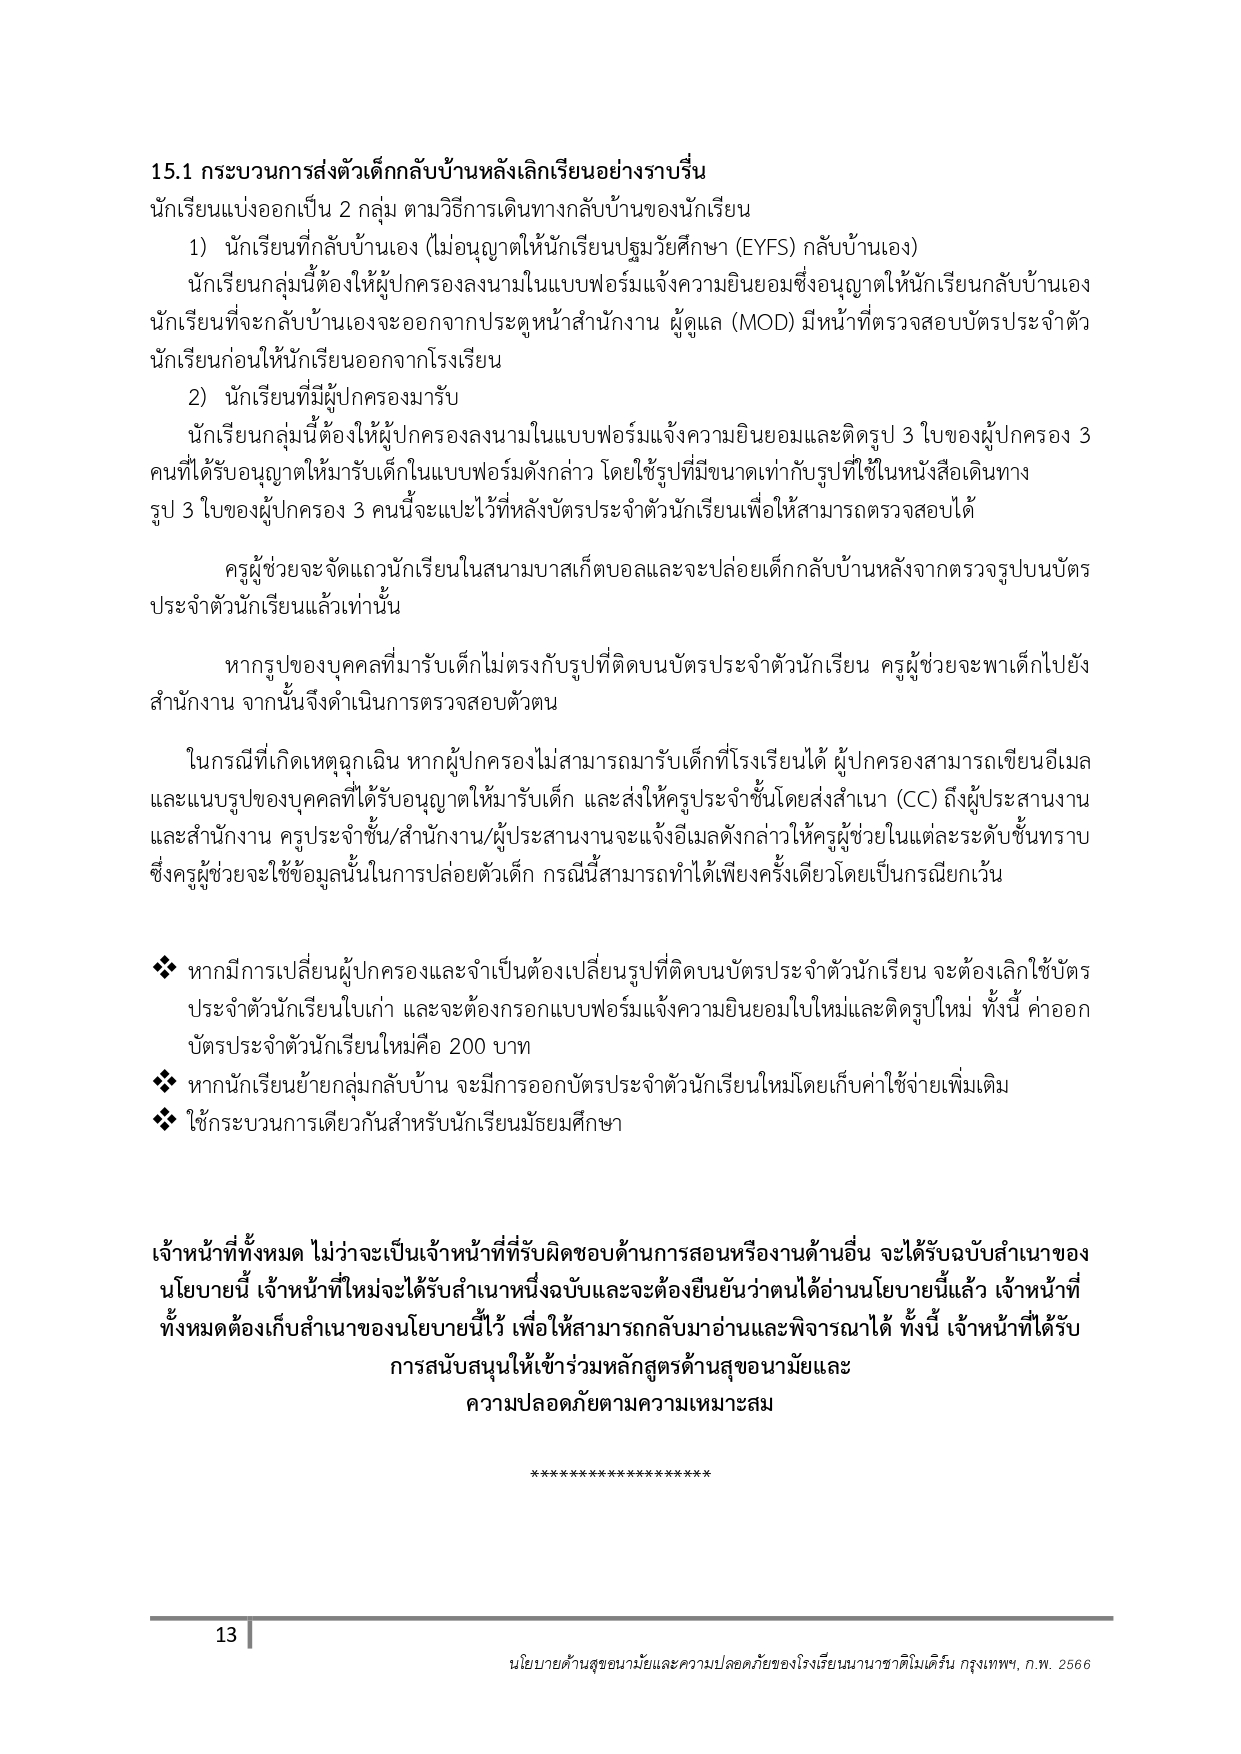 Health and Safety Policy แก้ไขภาษาไทย page 0013